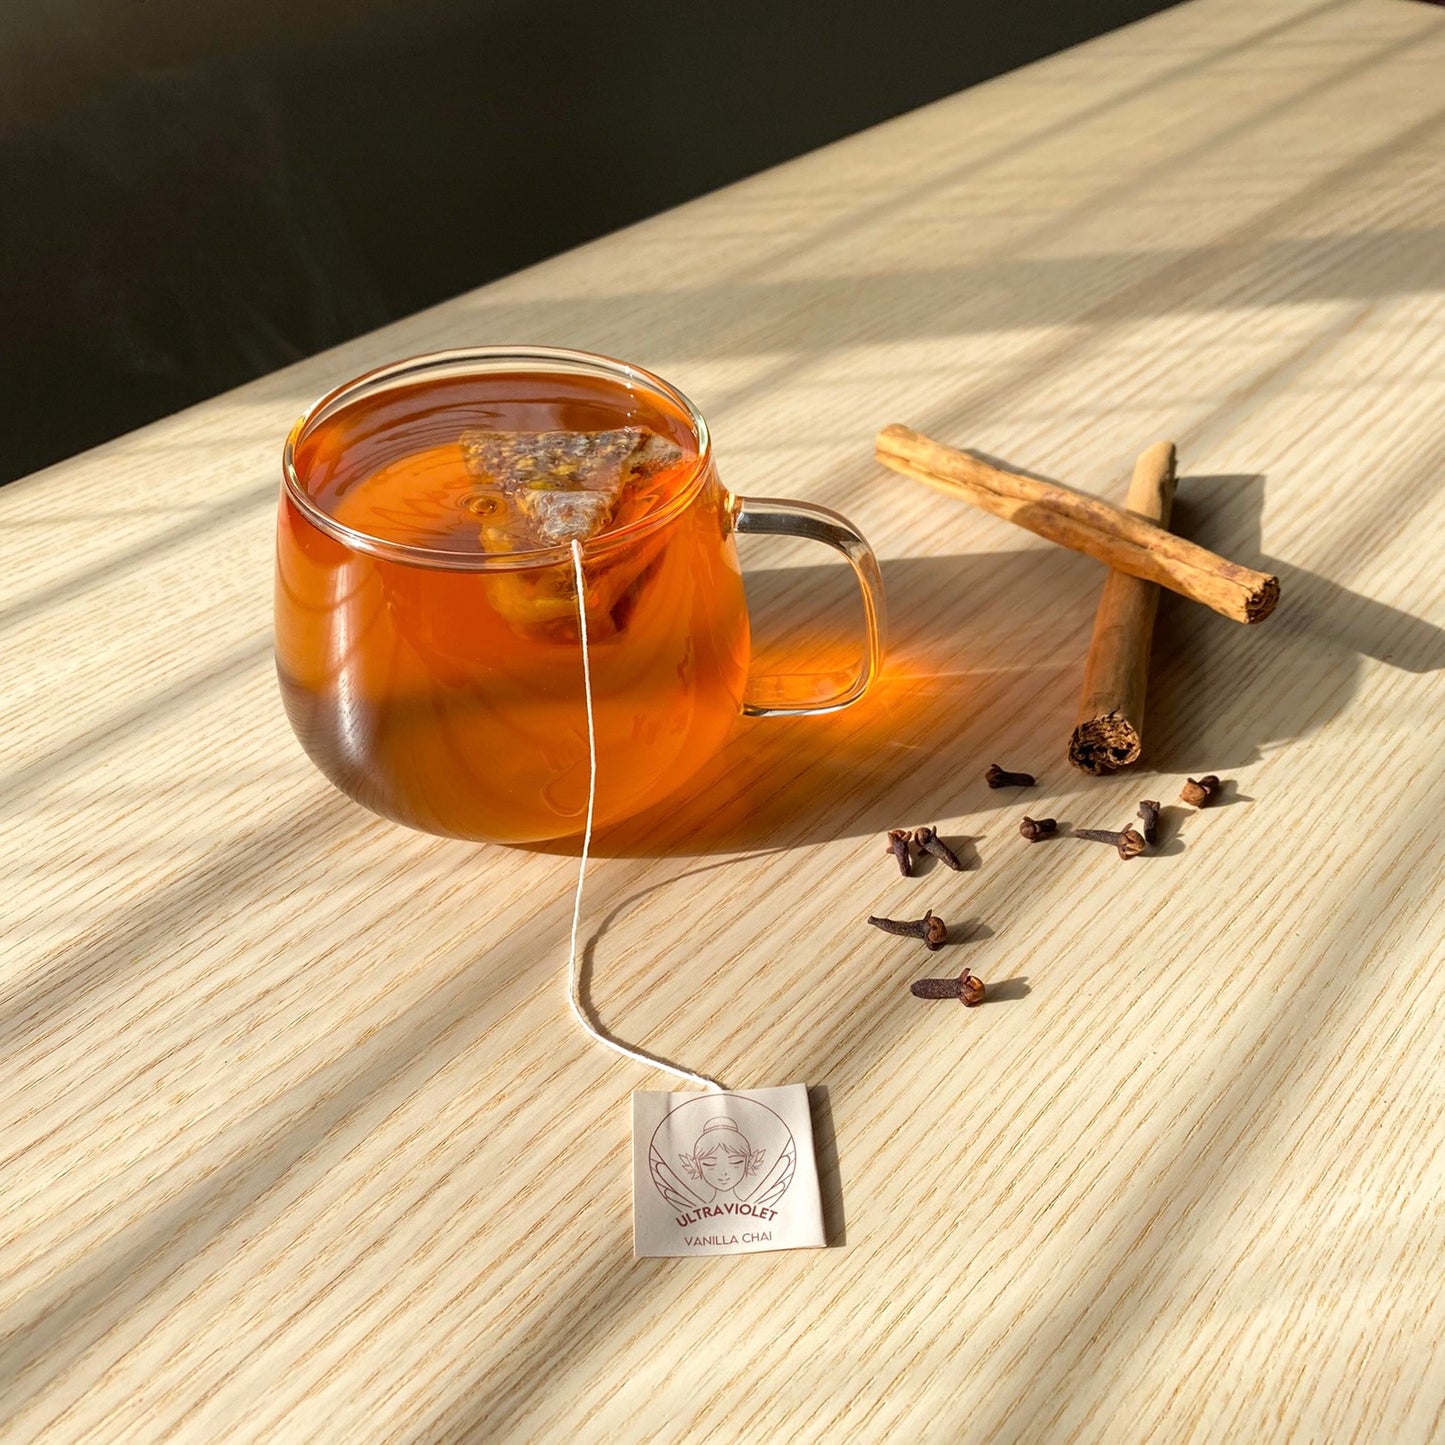 Vanilla Chai Tea | Spice Blend